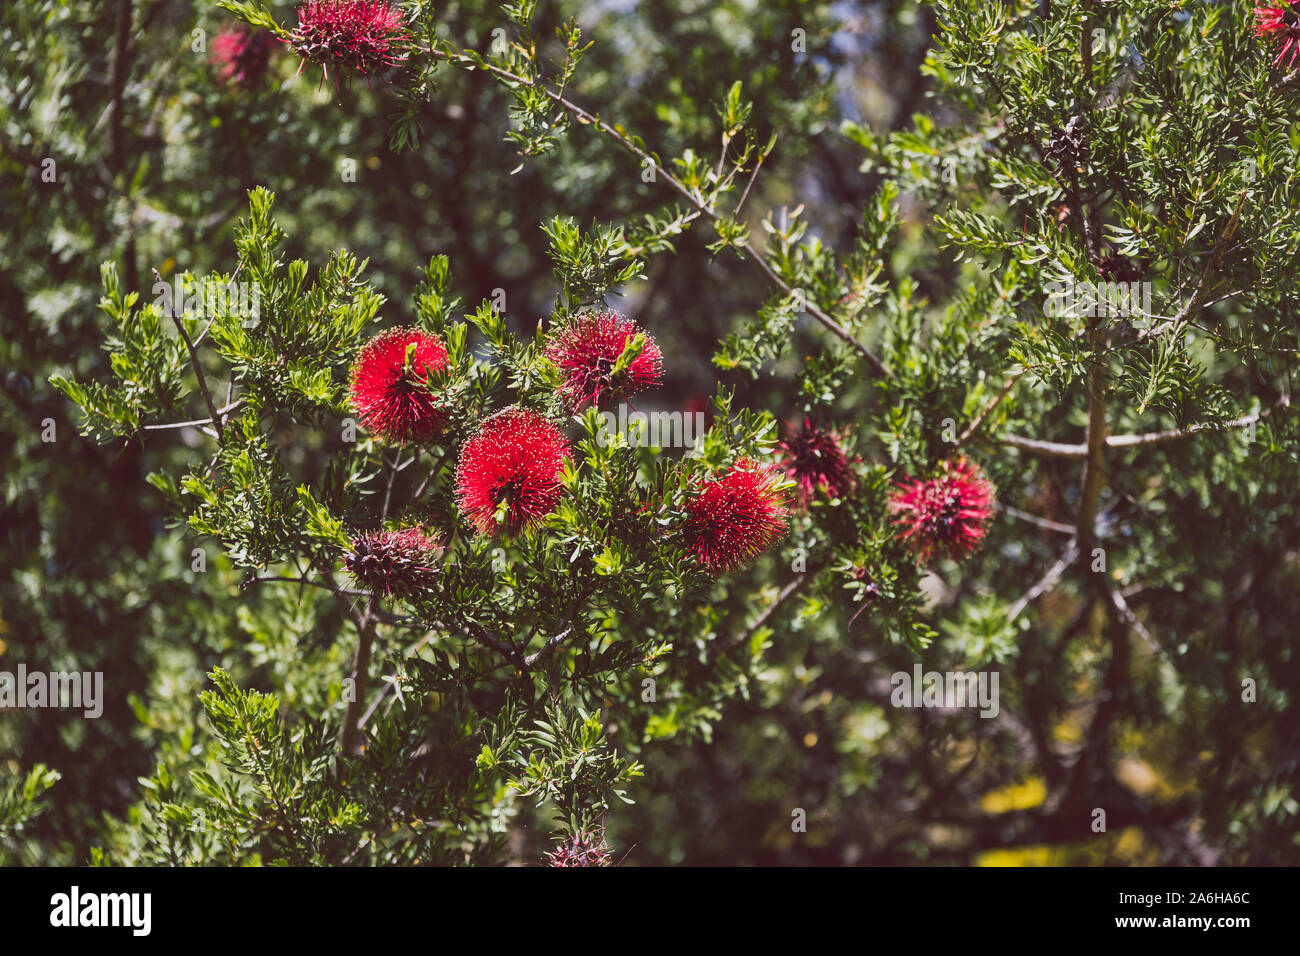 native Australian kunzea bottle brush plant outdoor in sunny backyard shot at shallow depth of field Stock Photo